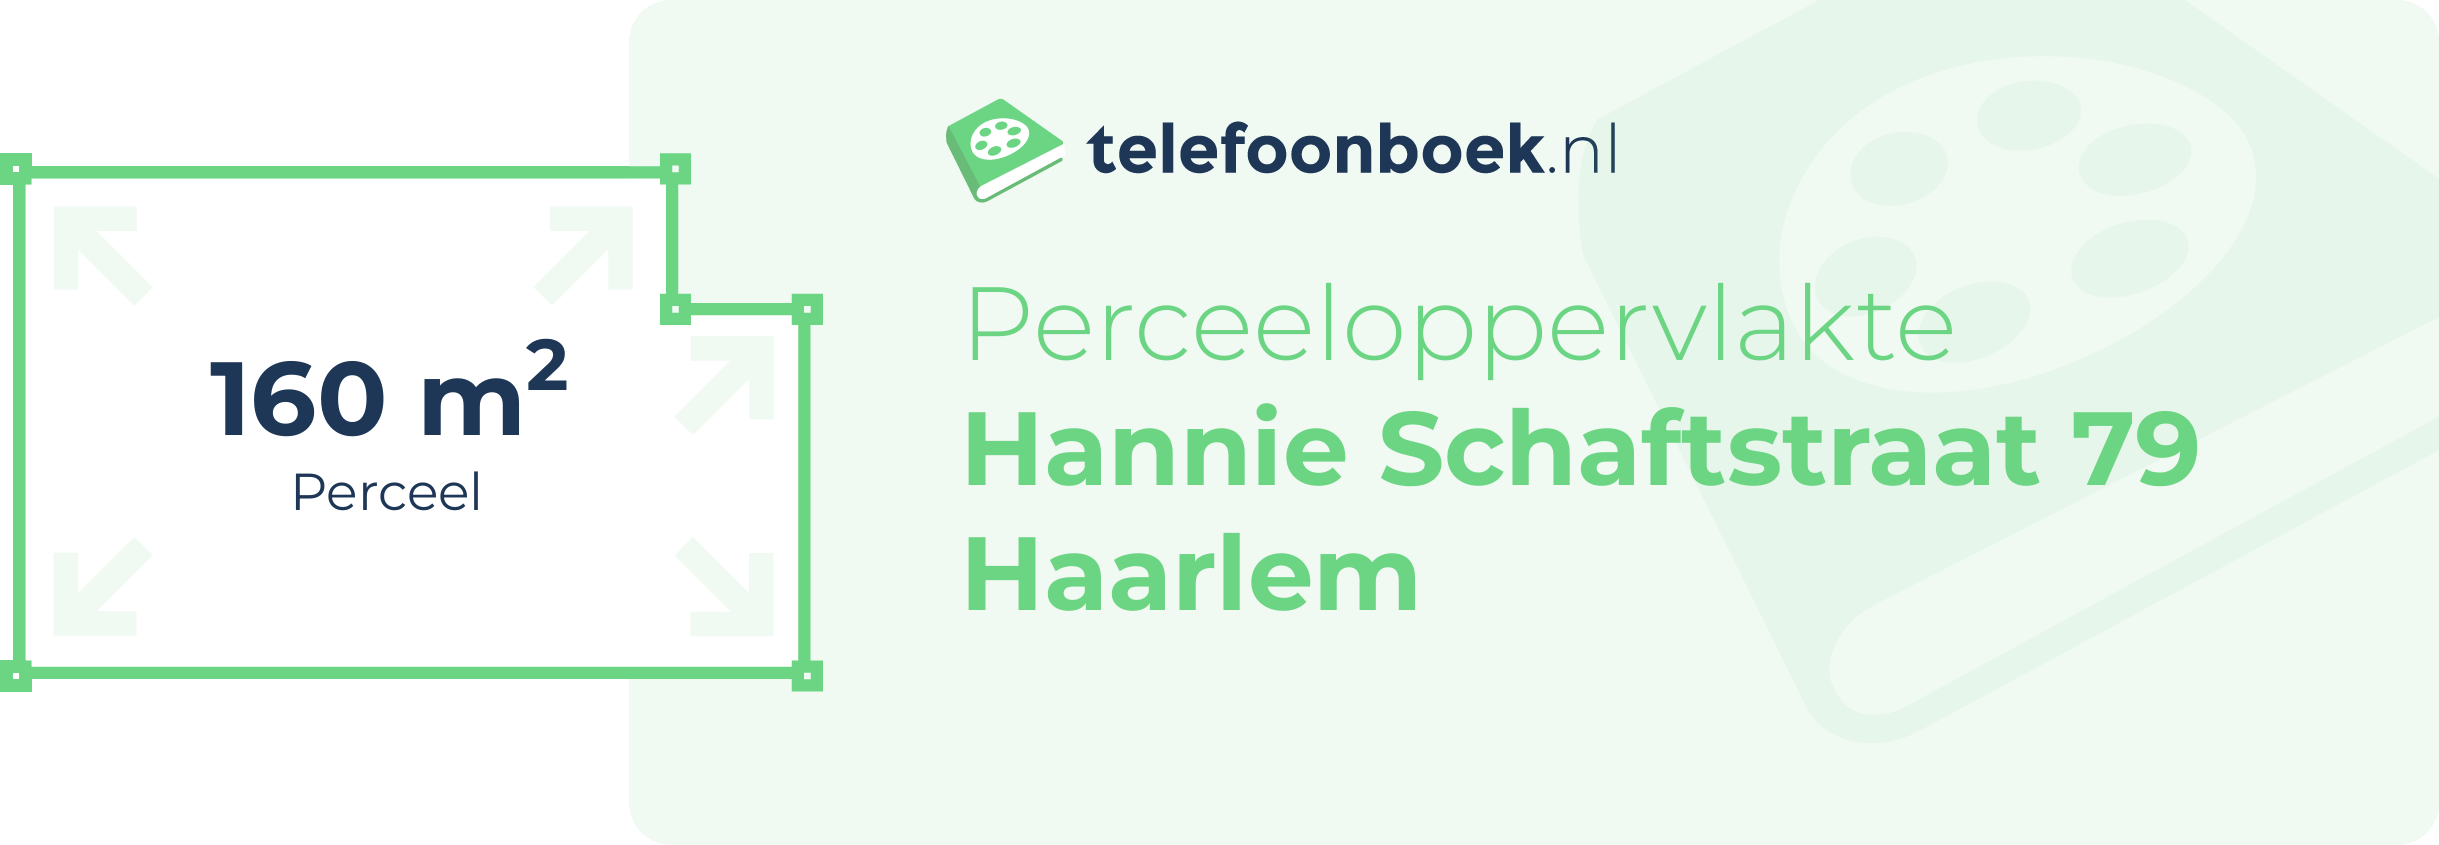 Perceeloppervlakte Hannie Schaftstraat 79 Haarlem